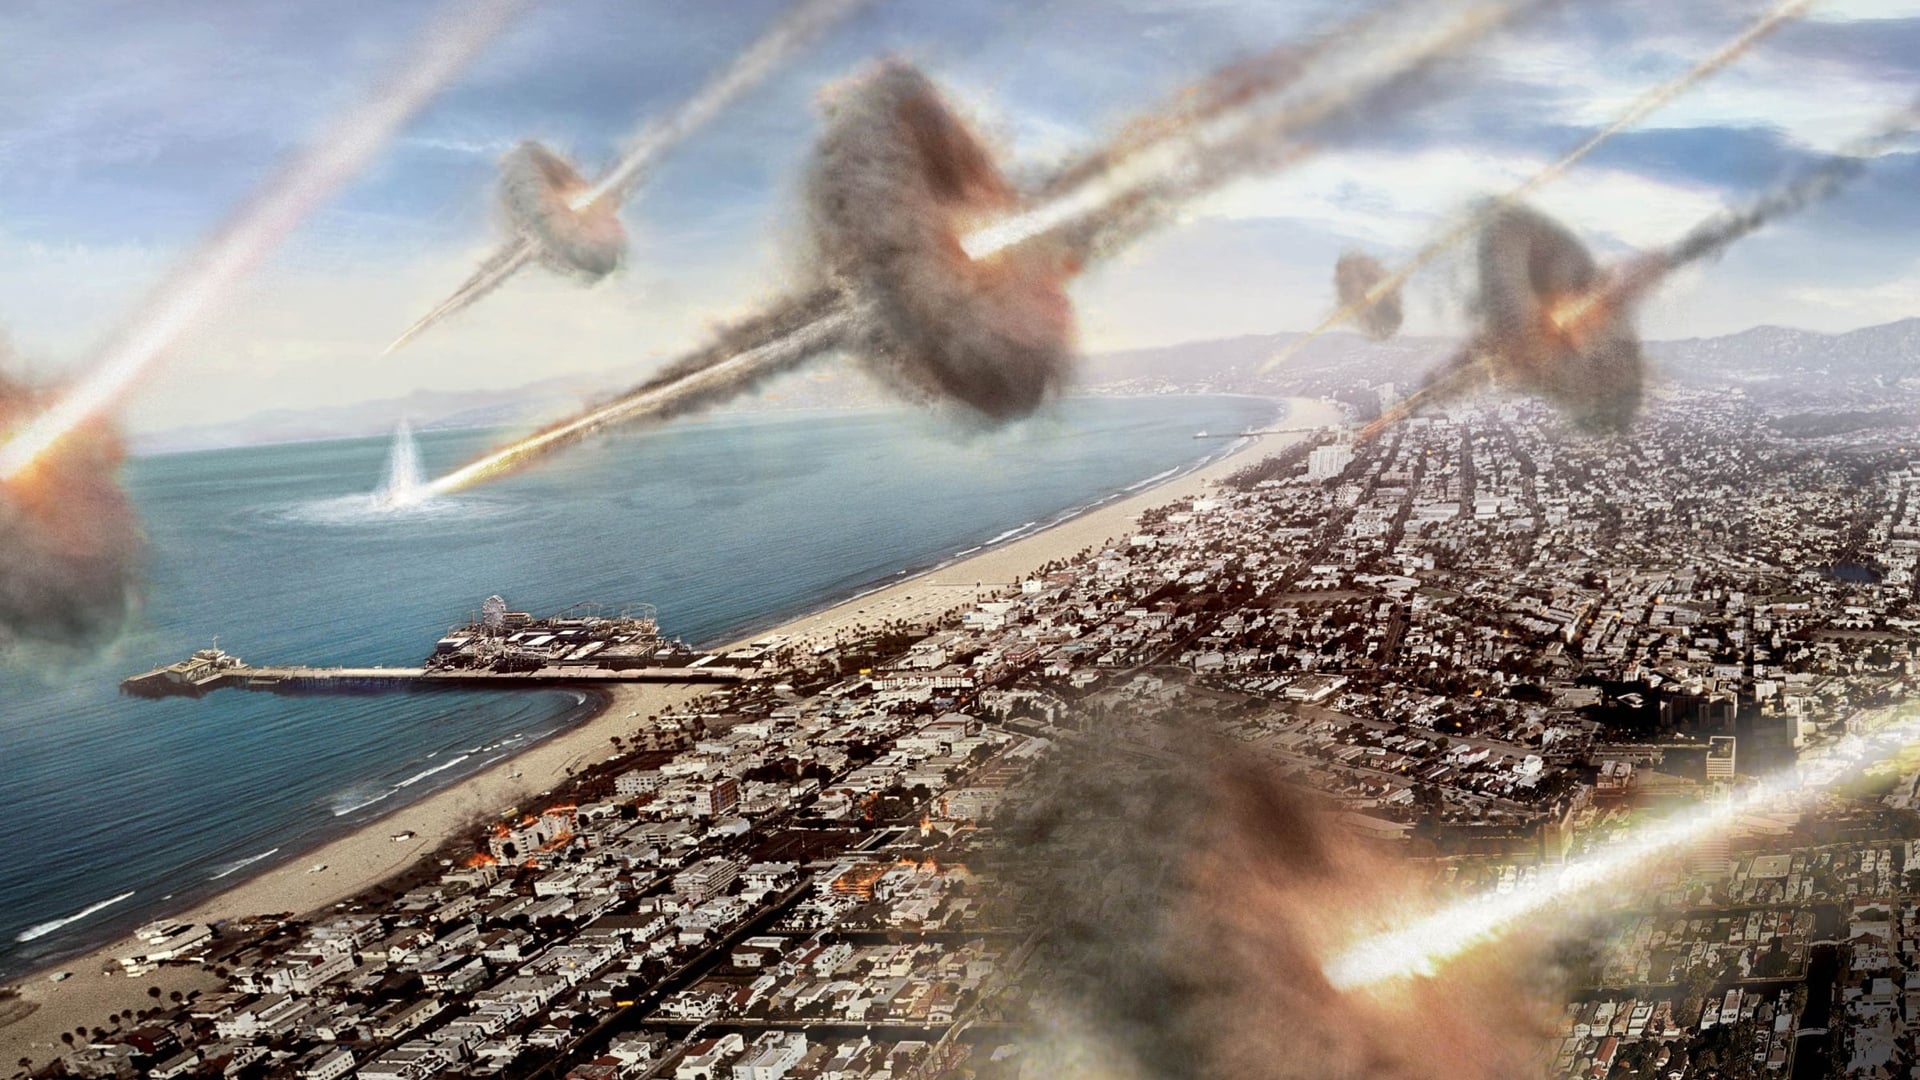 Battle: Los Angeles (2011)